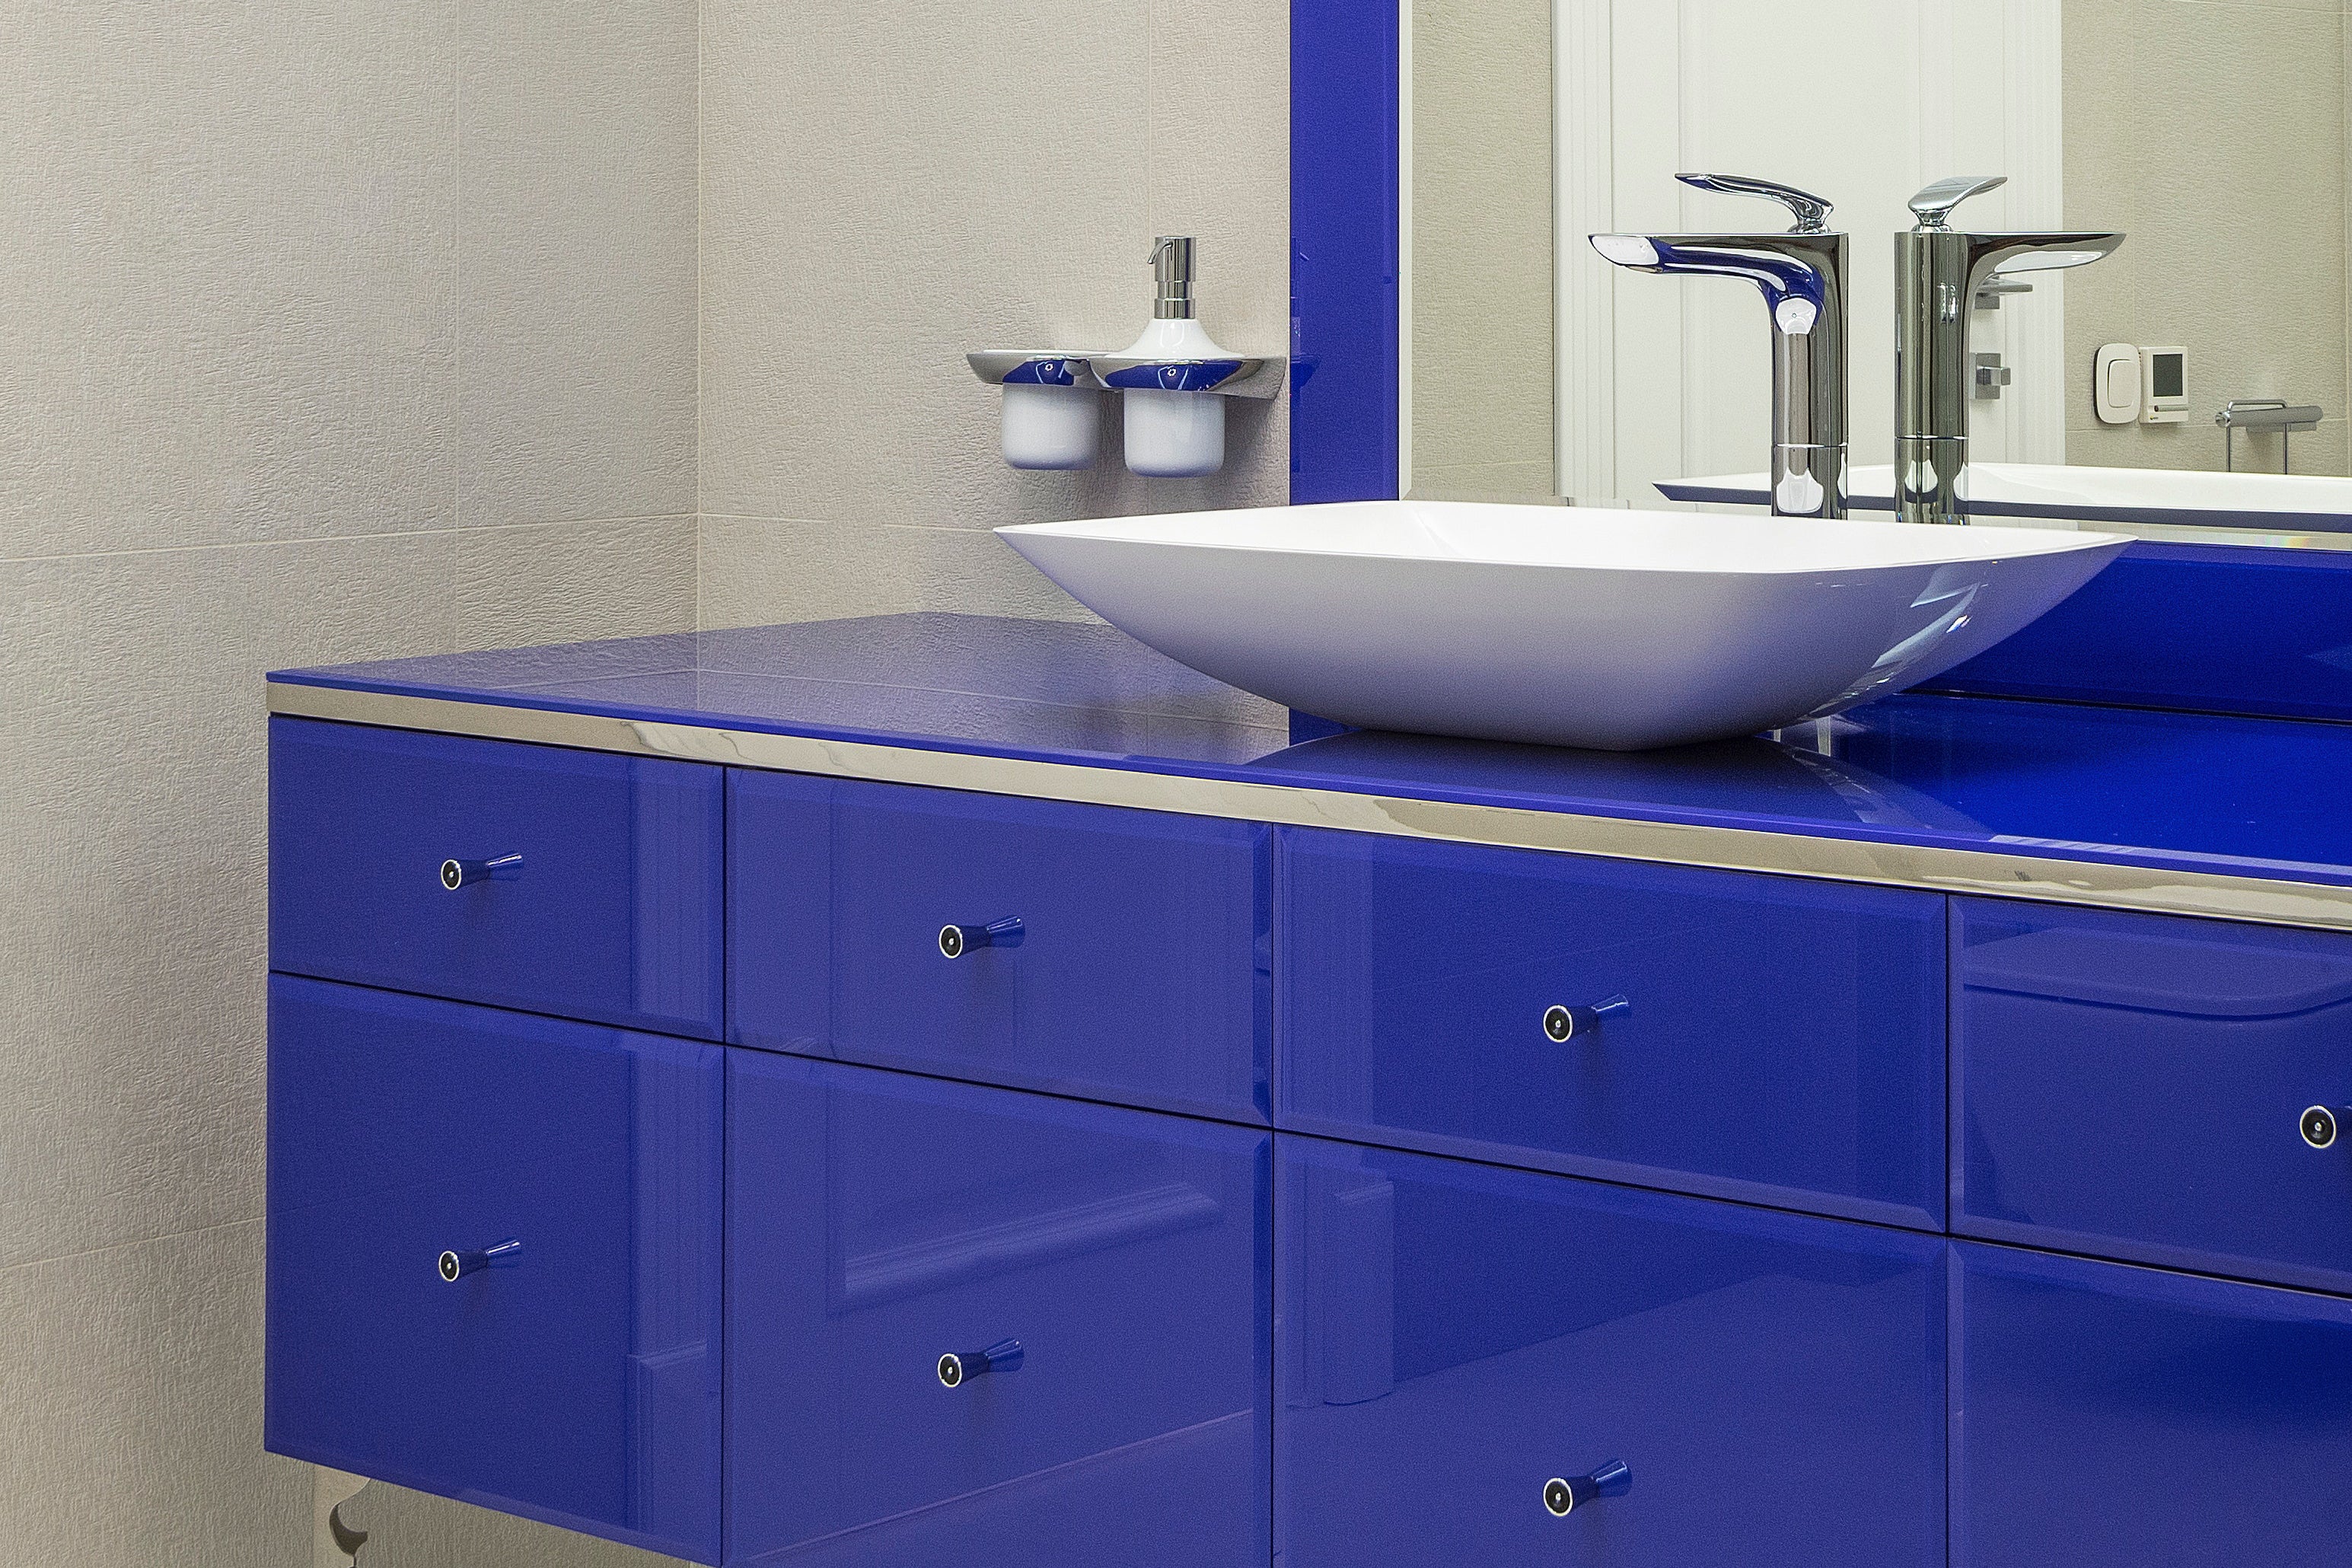 Blue furniture in modern bathroom